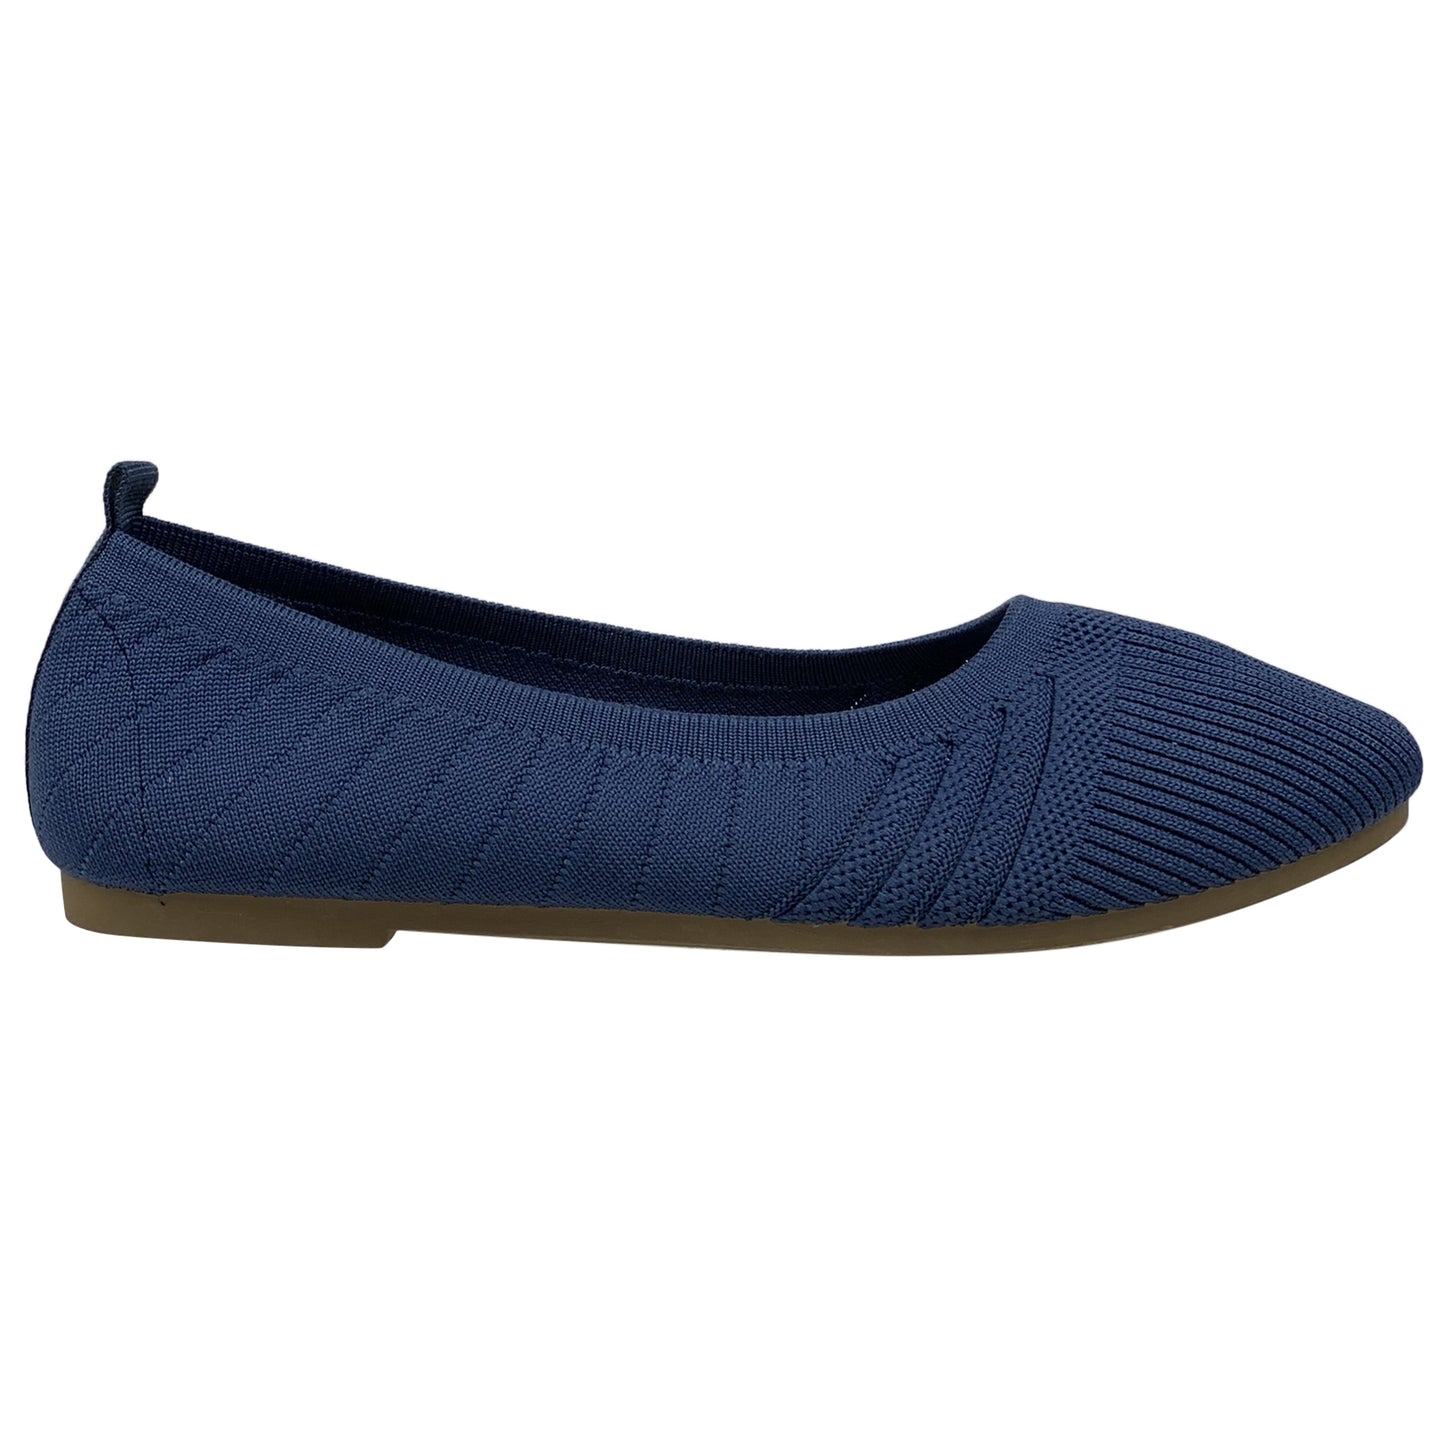 SOBEYO Sweater Round Toe Ballet Flats Soft Foldable Sole Blue